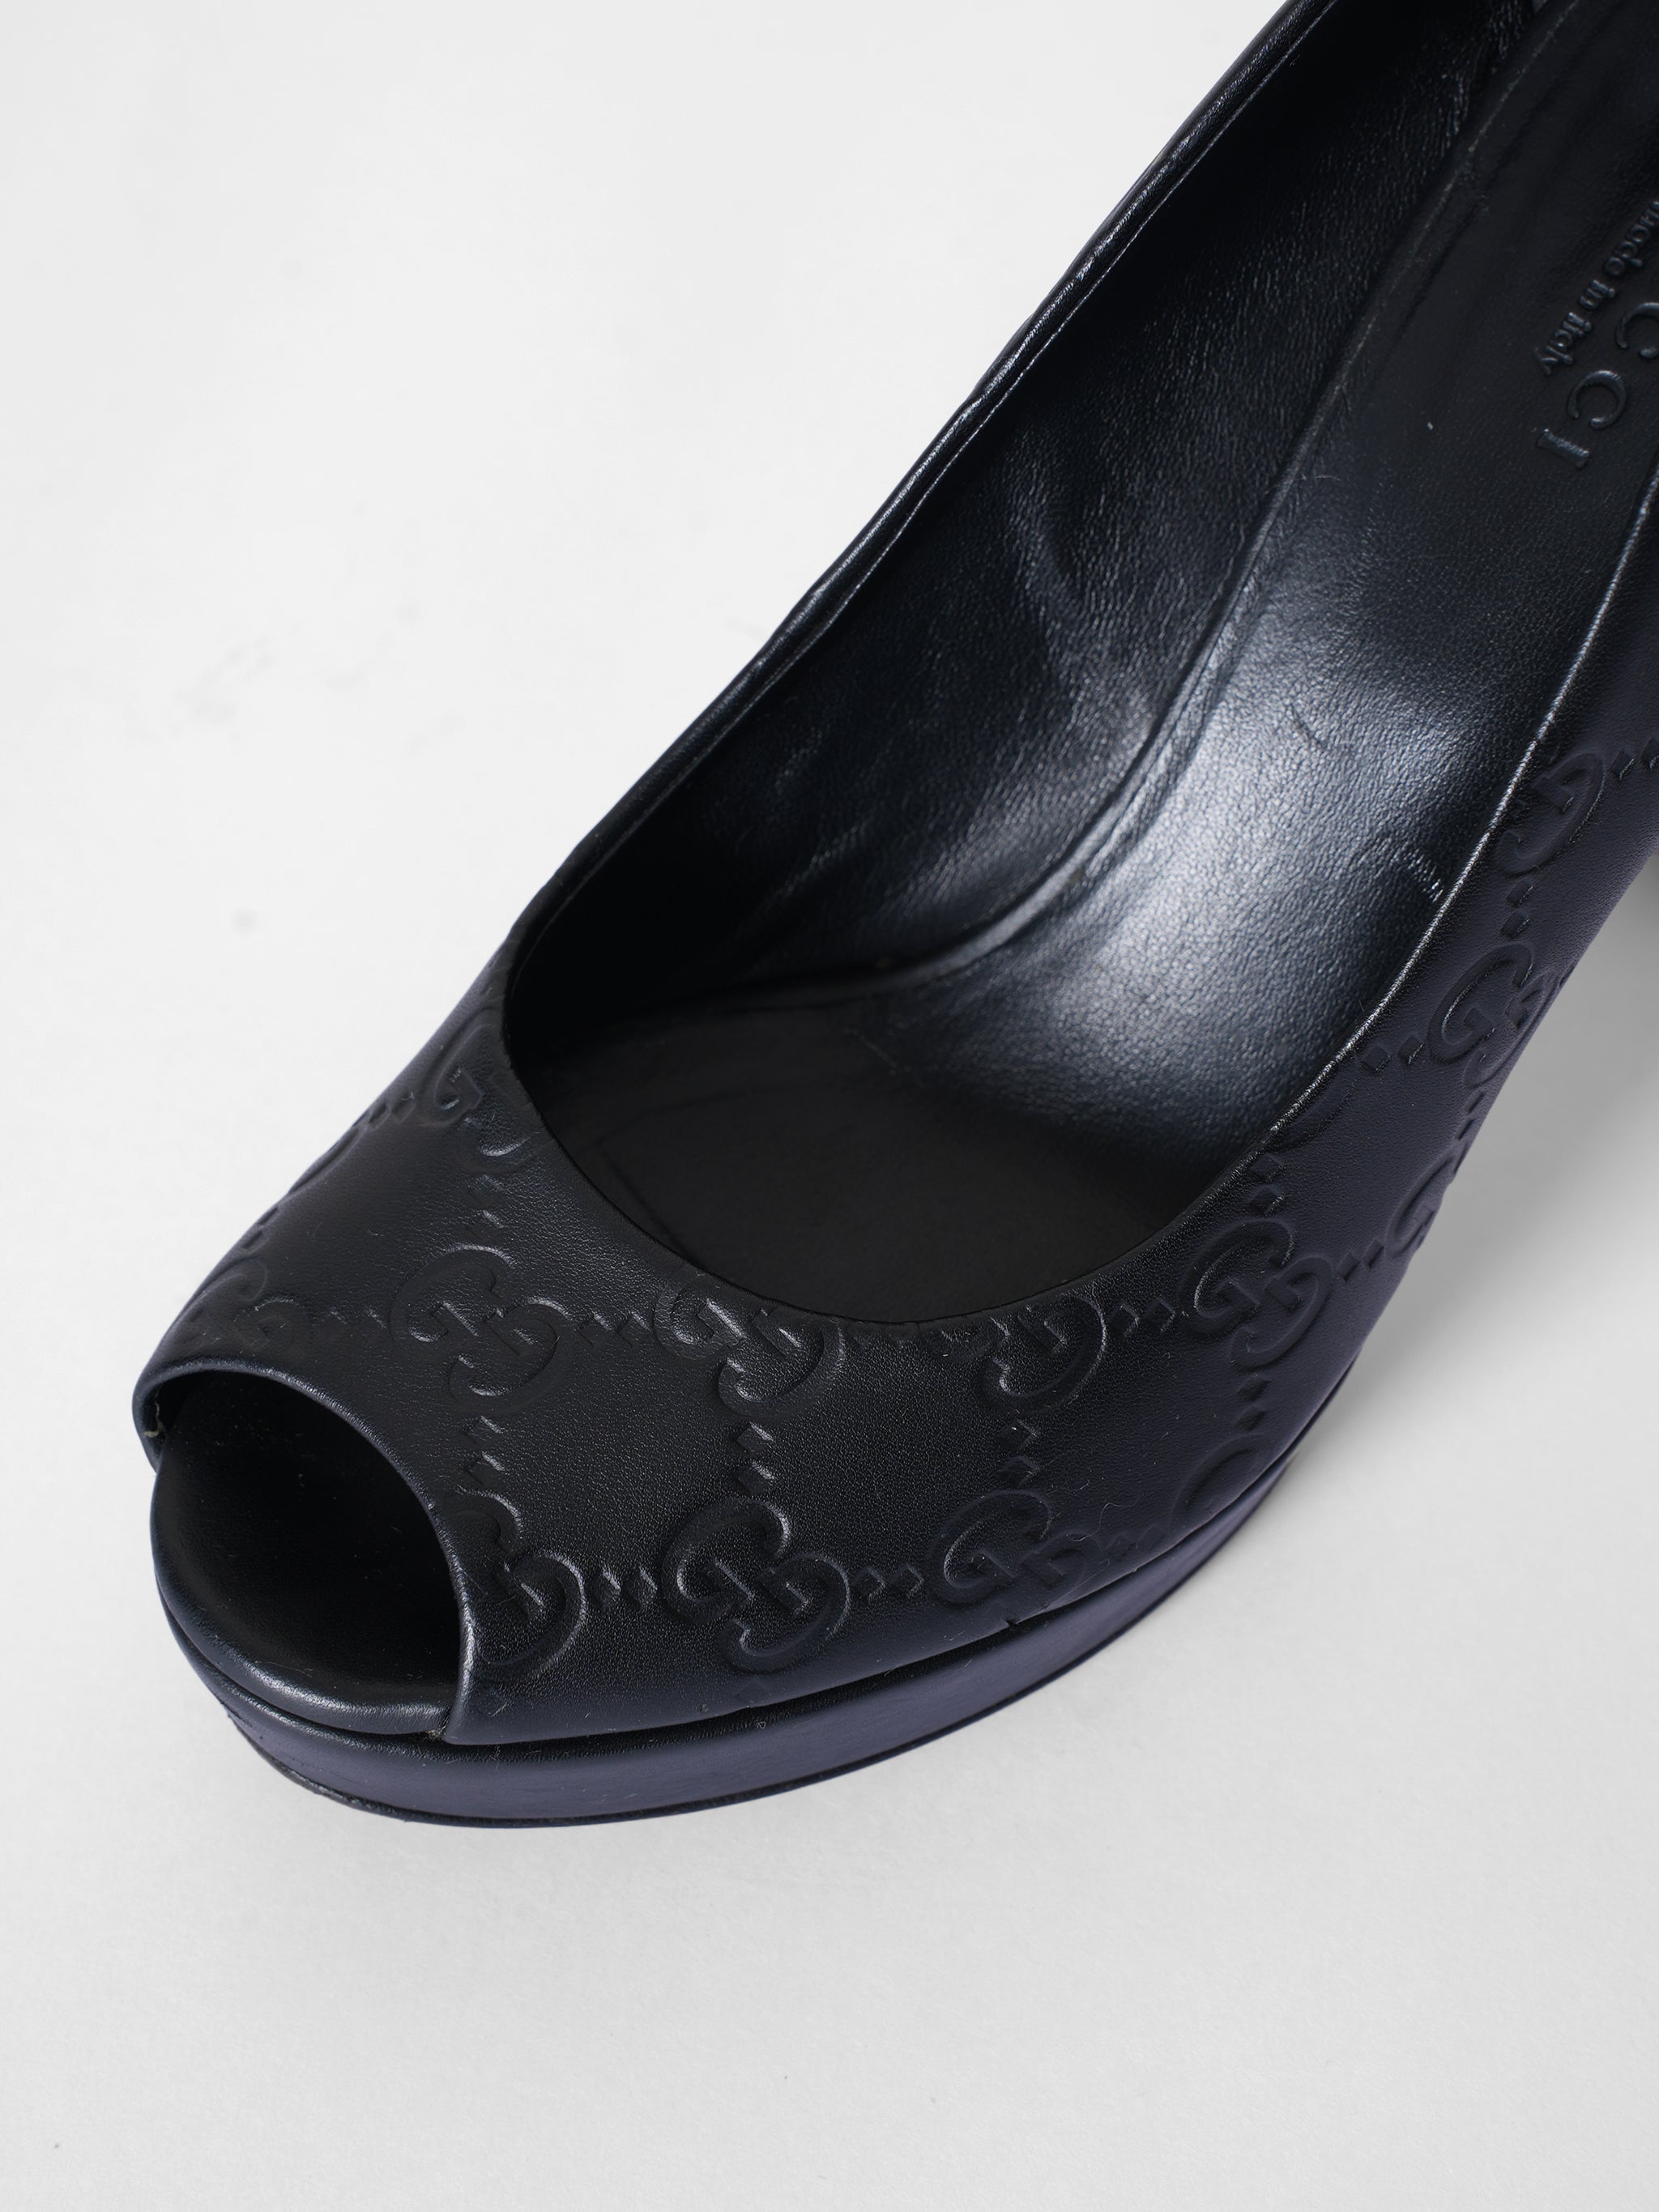 Gucci Black Guccissima Leather Peep Toe Form Pumps